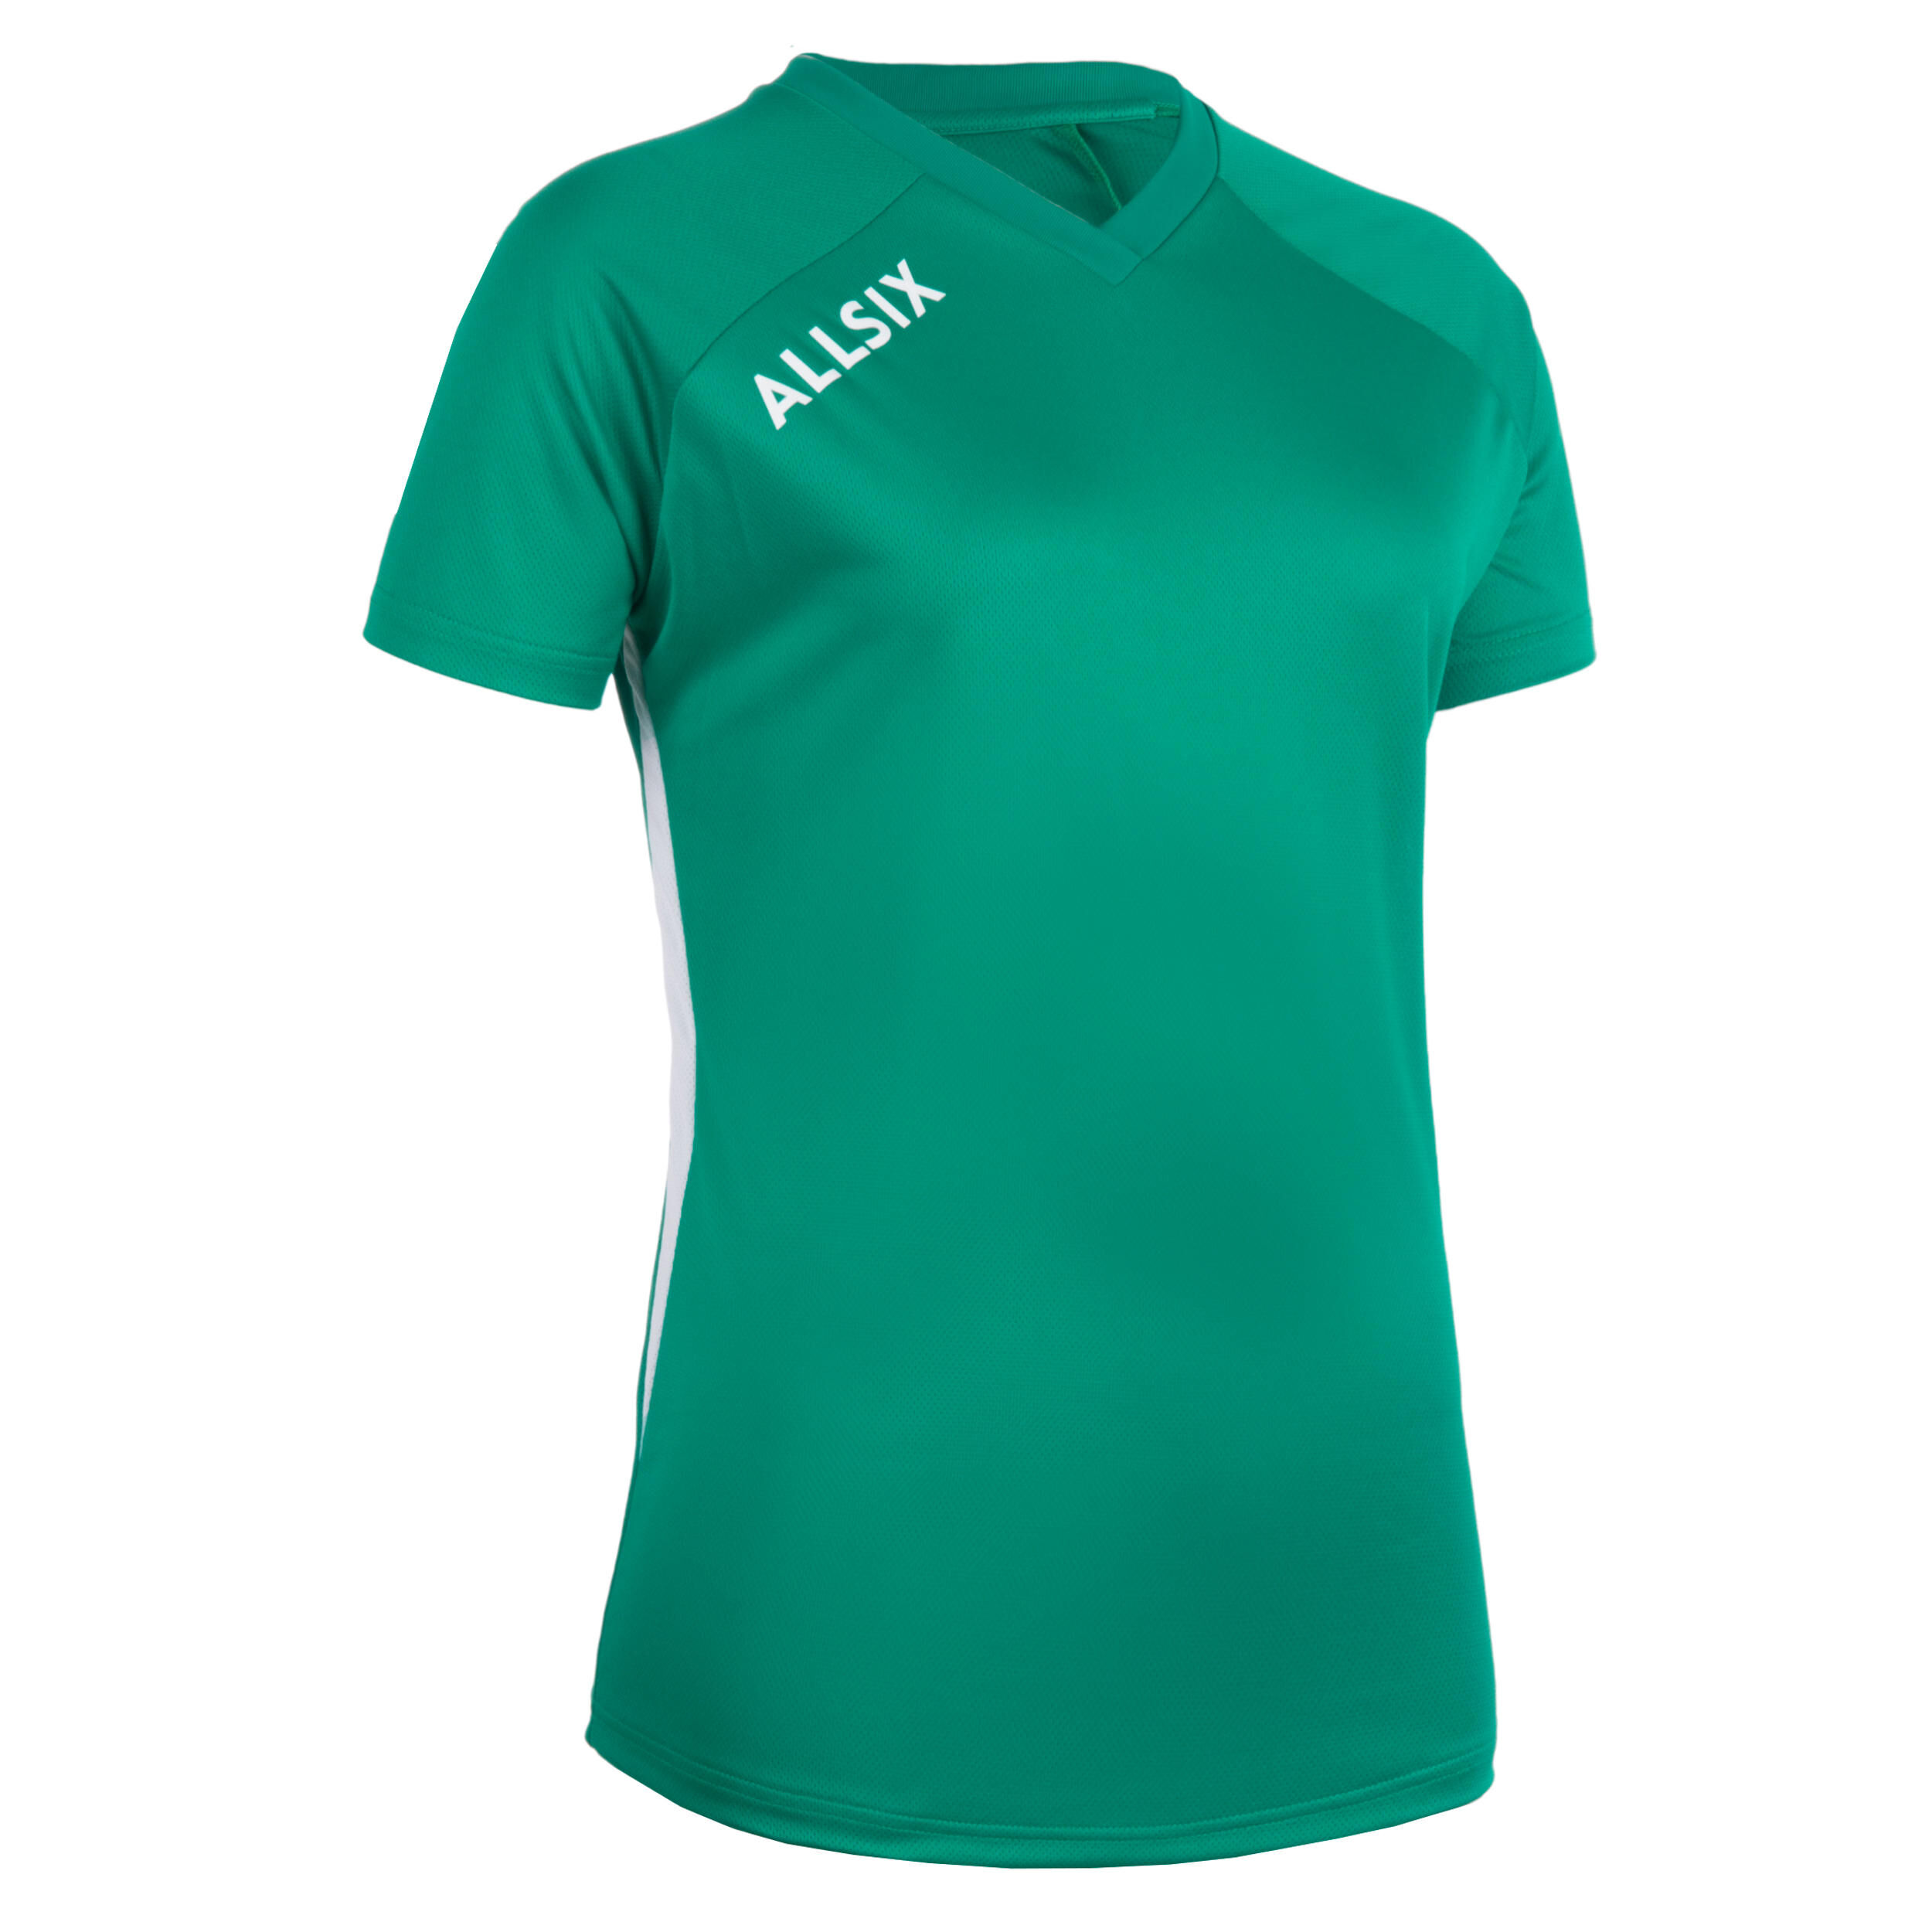 ALLSIX V100 Women's Volleyball Jersey - Green